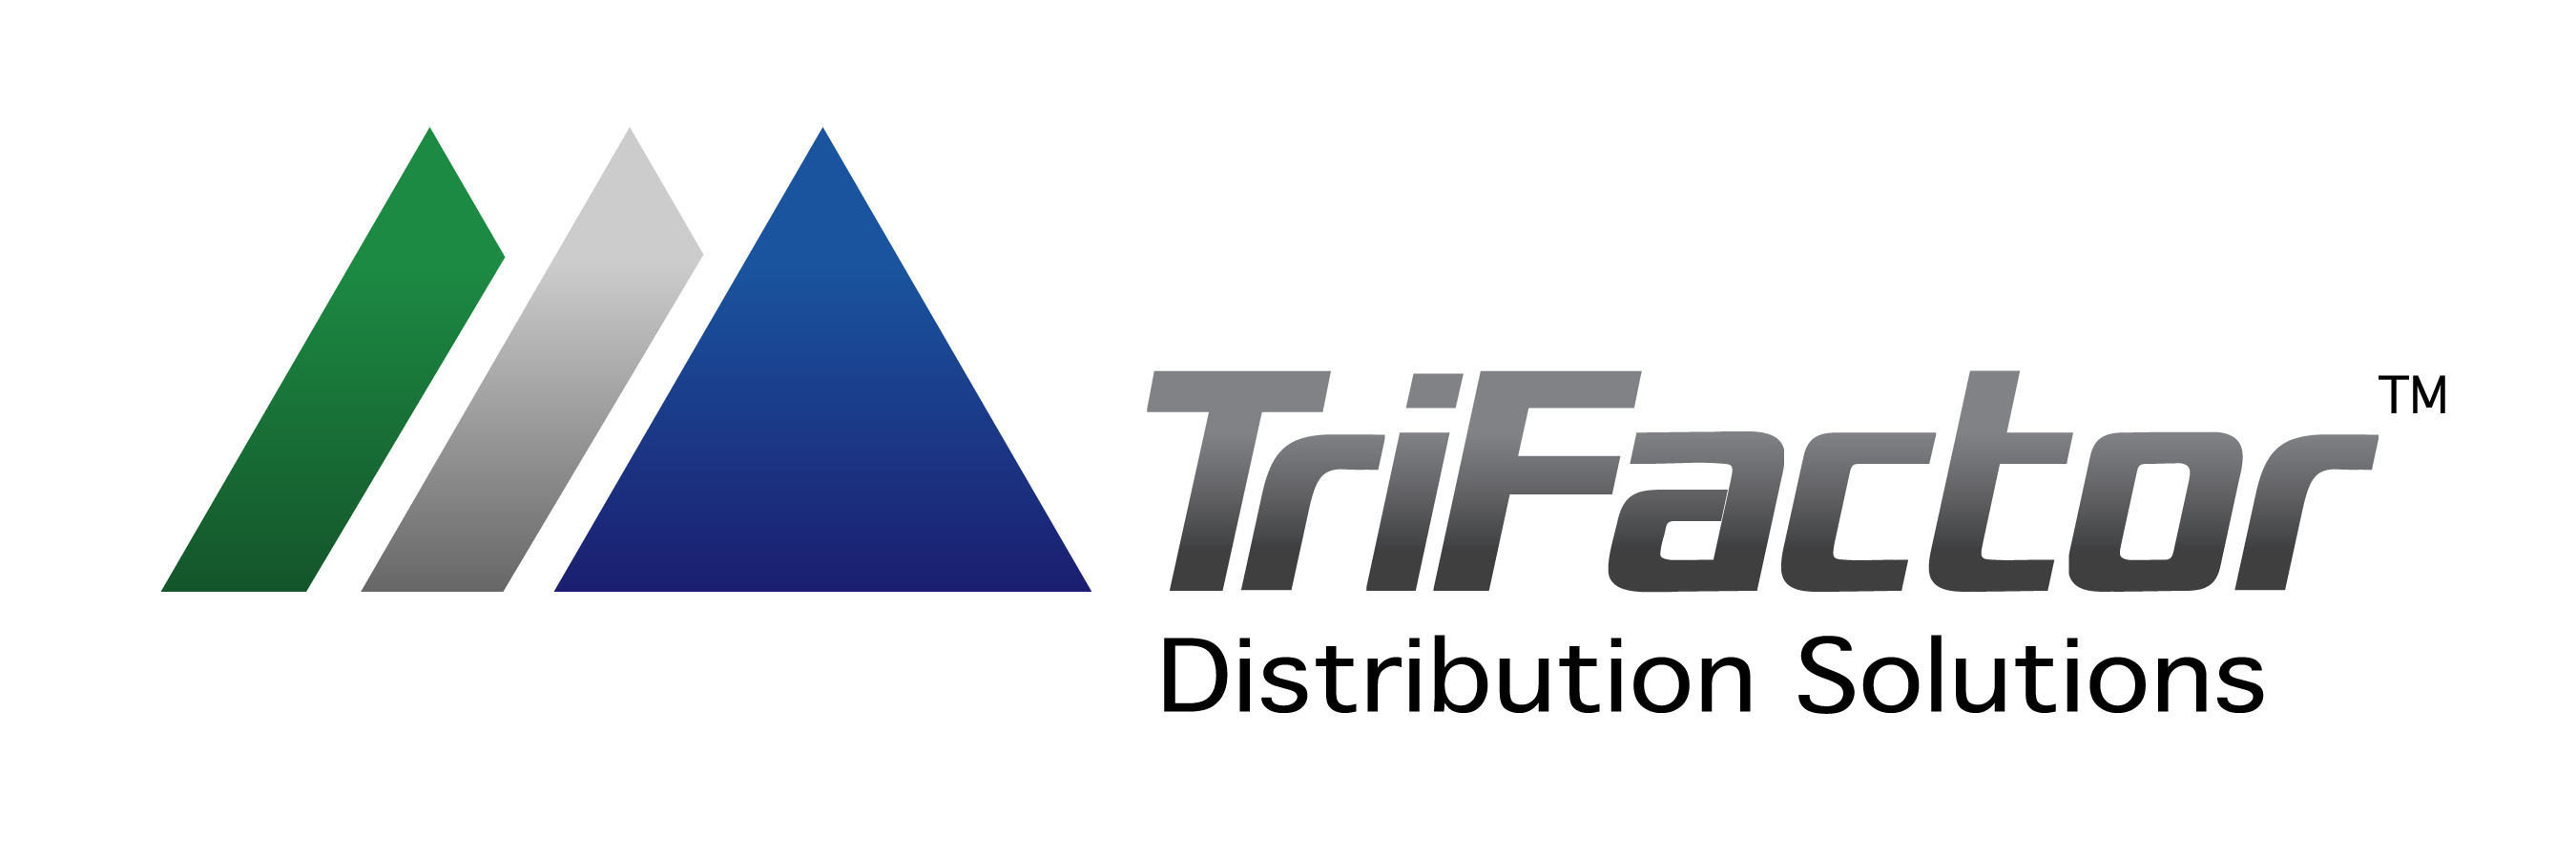 Trifactor, LLC logo.